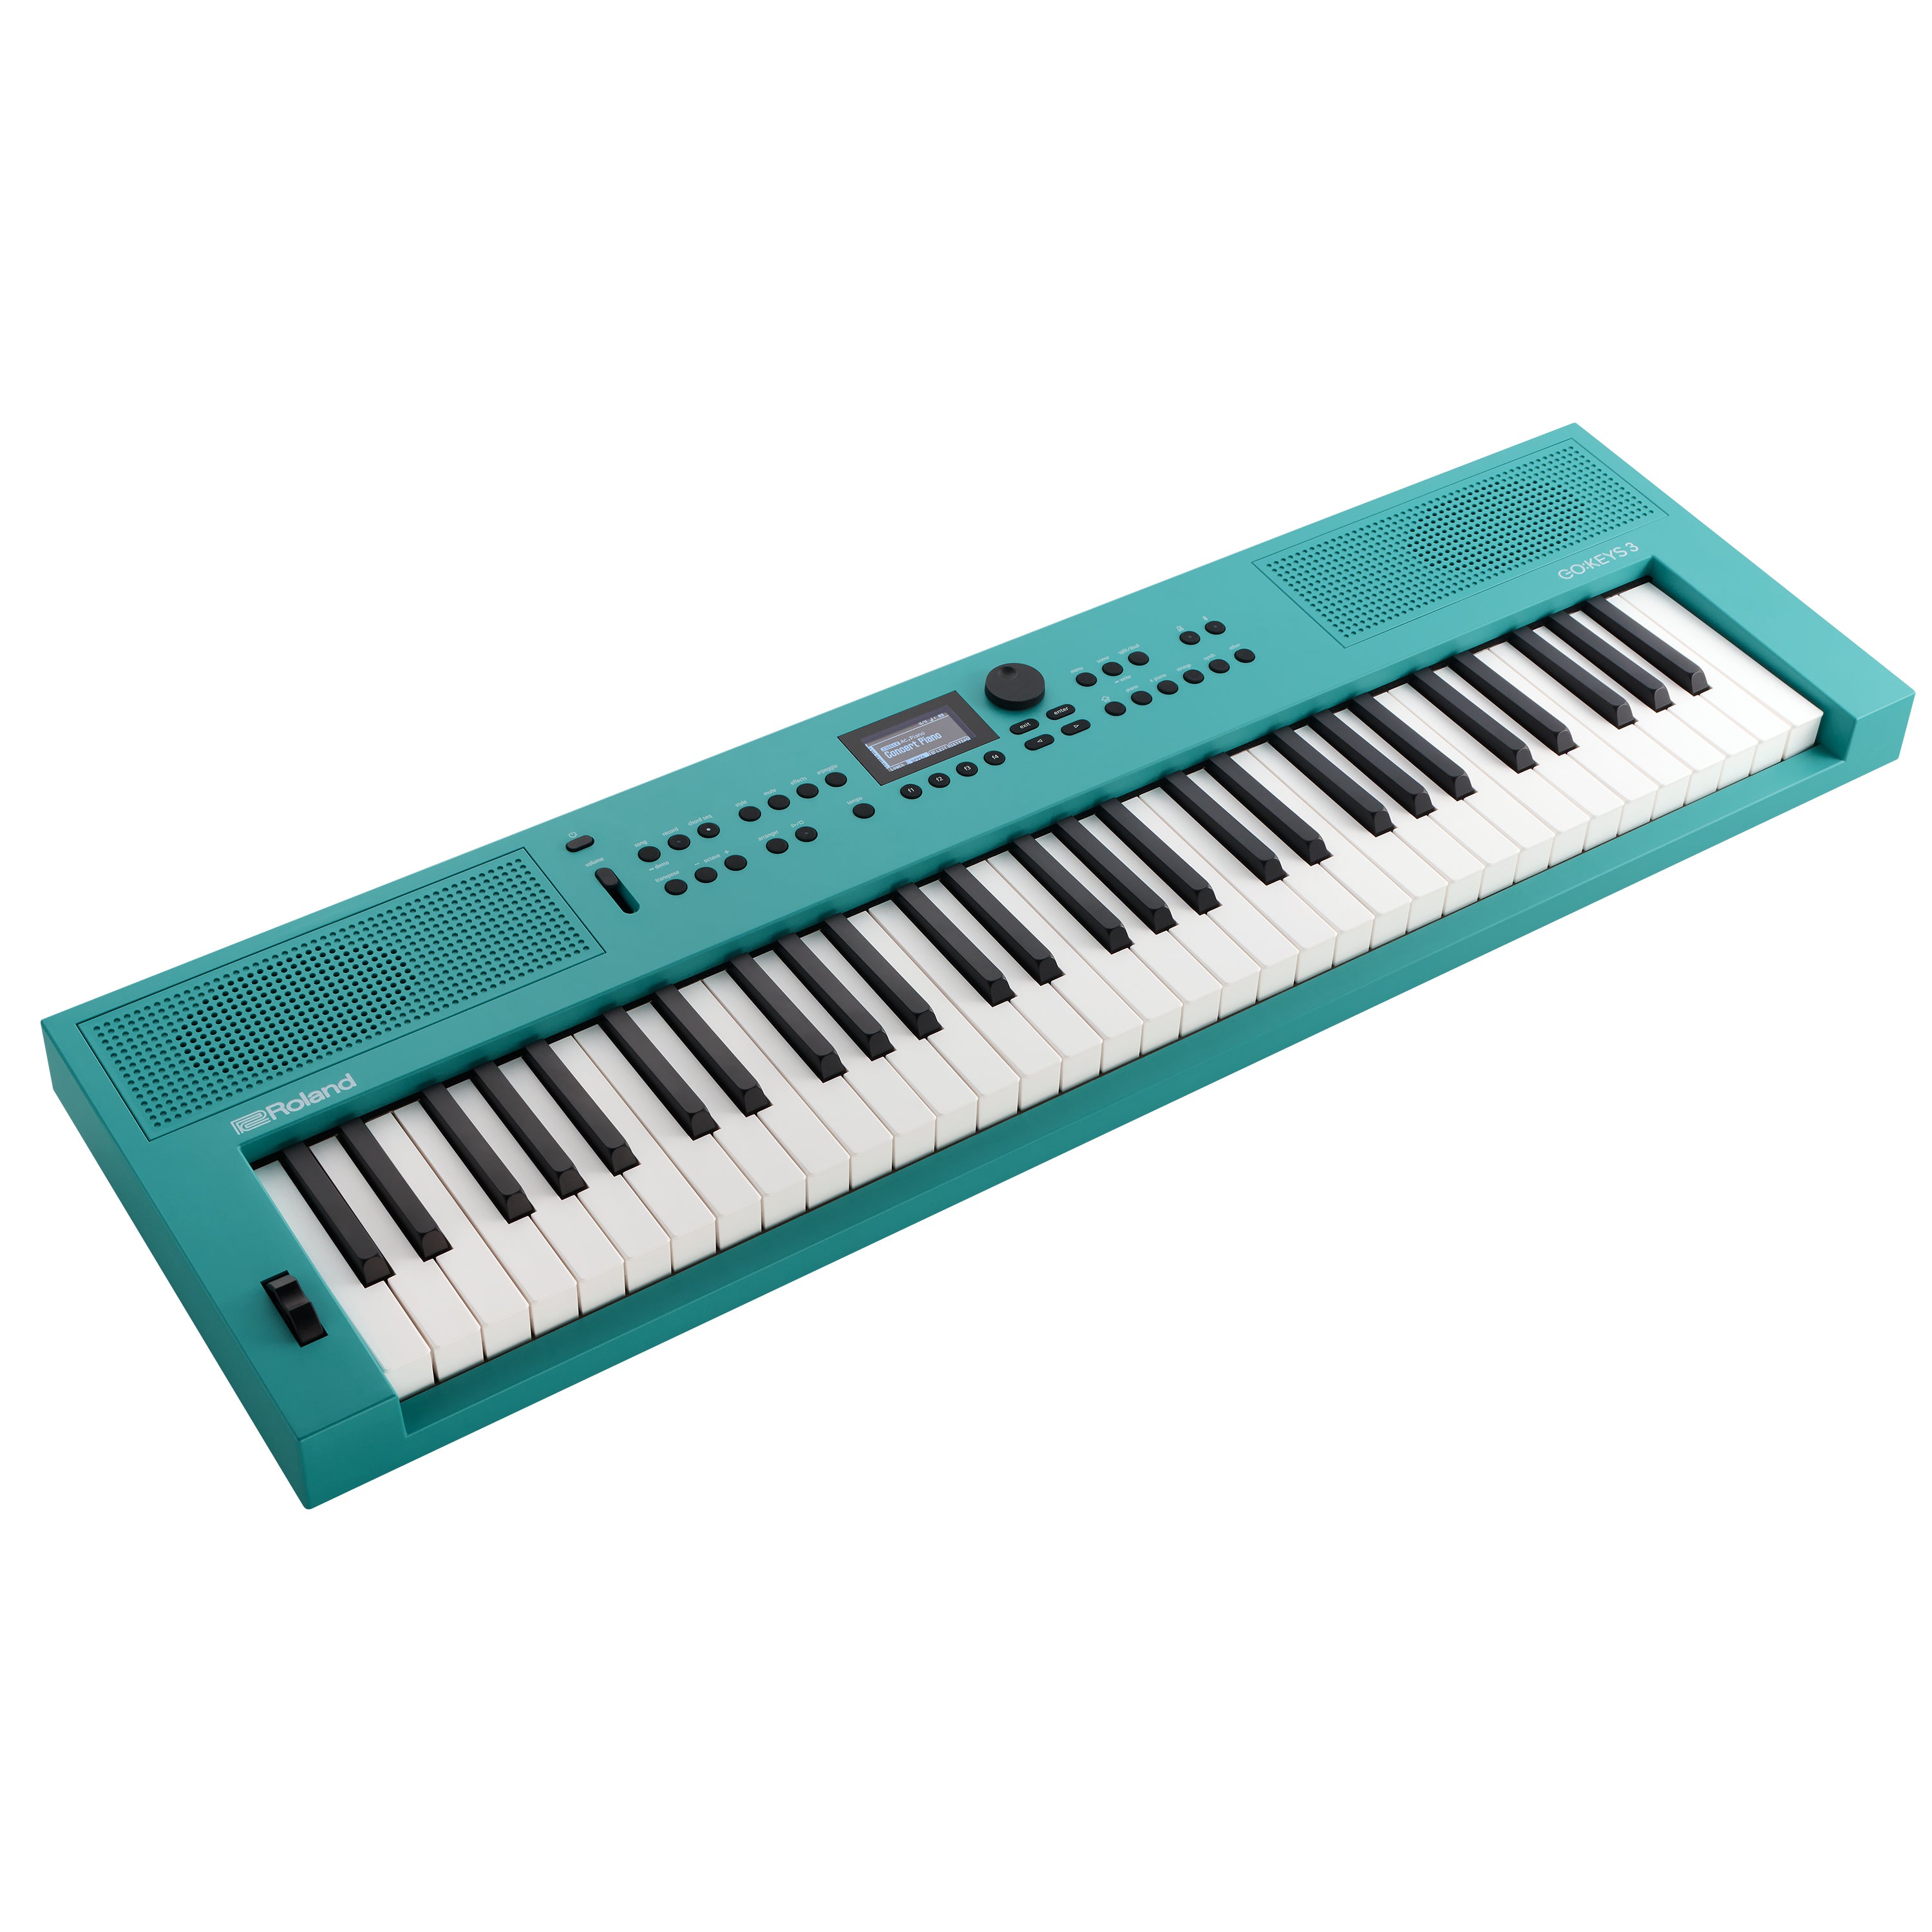 Roland GoKeys 3 Music Creation Keyboard - Turquoise, View 1